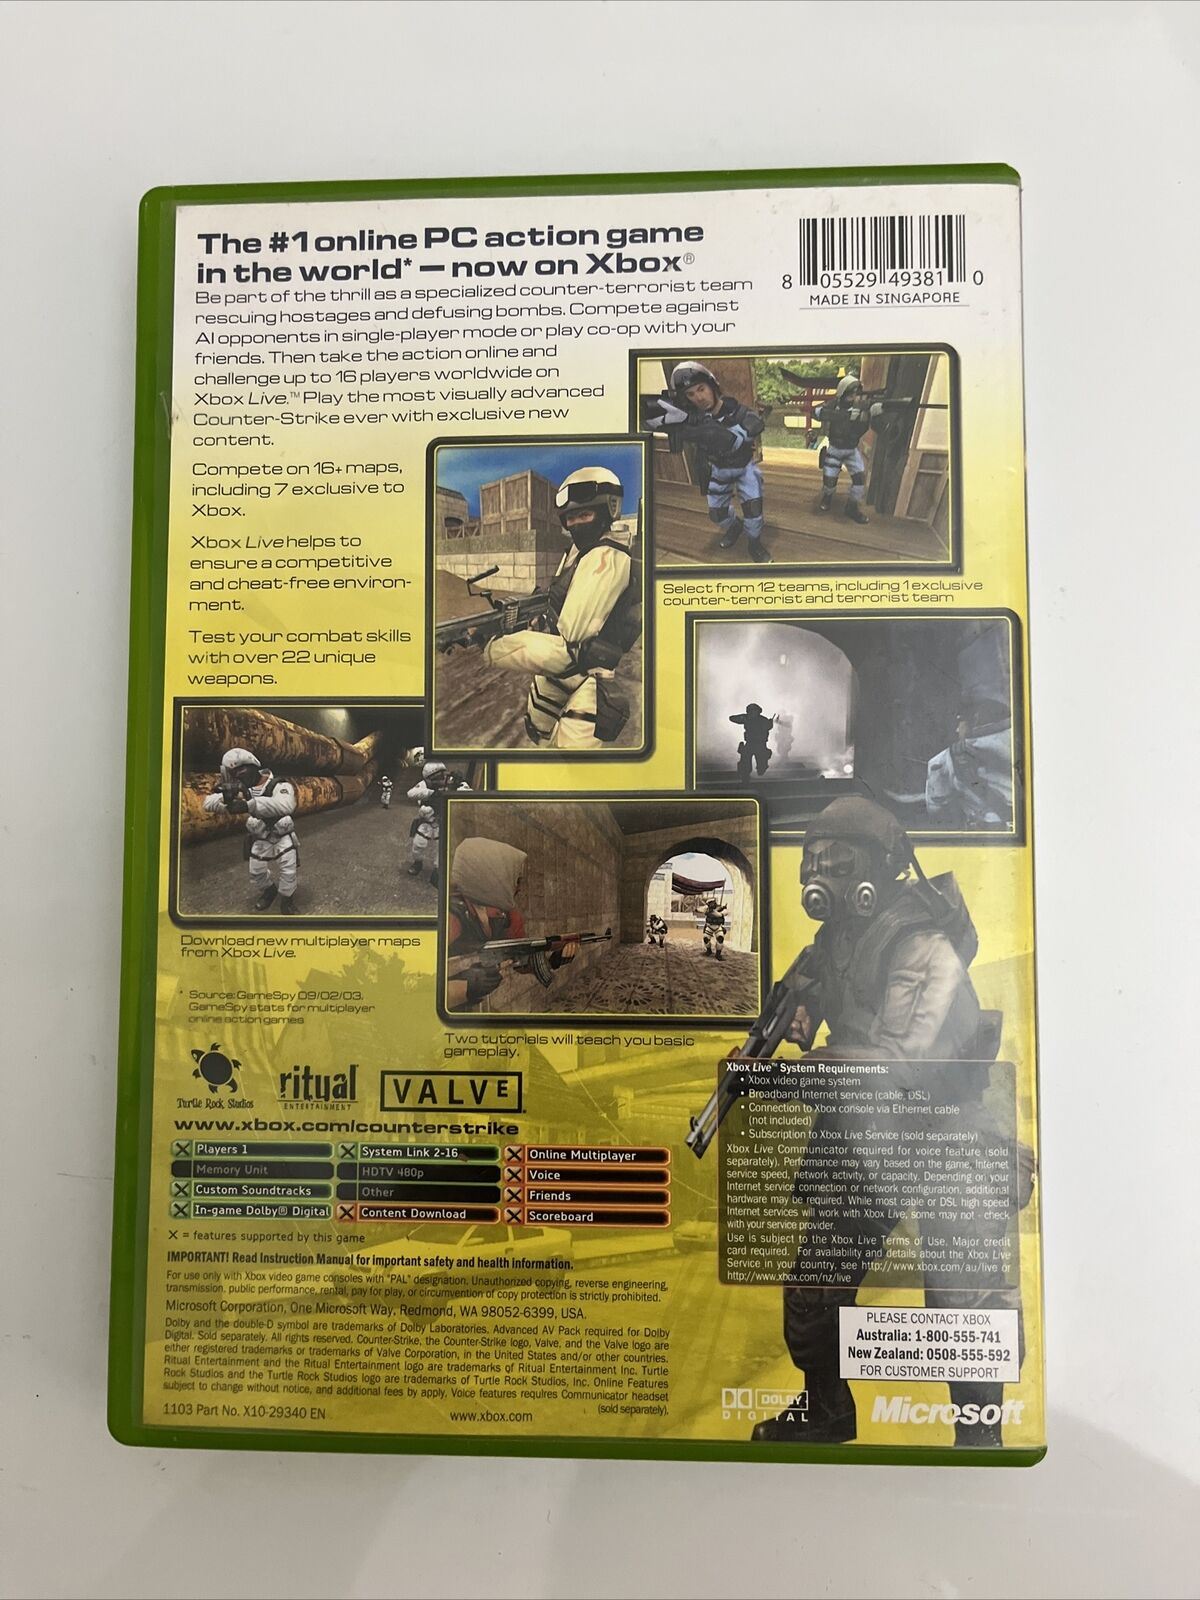 Counter Strike - Microsoft XBOX Original PAL Game